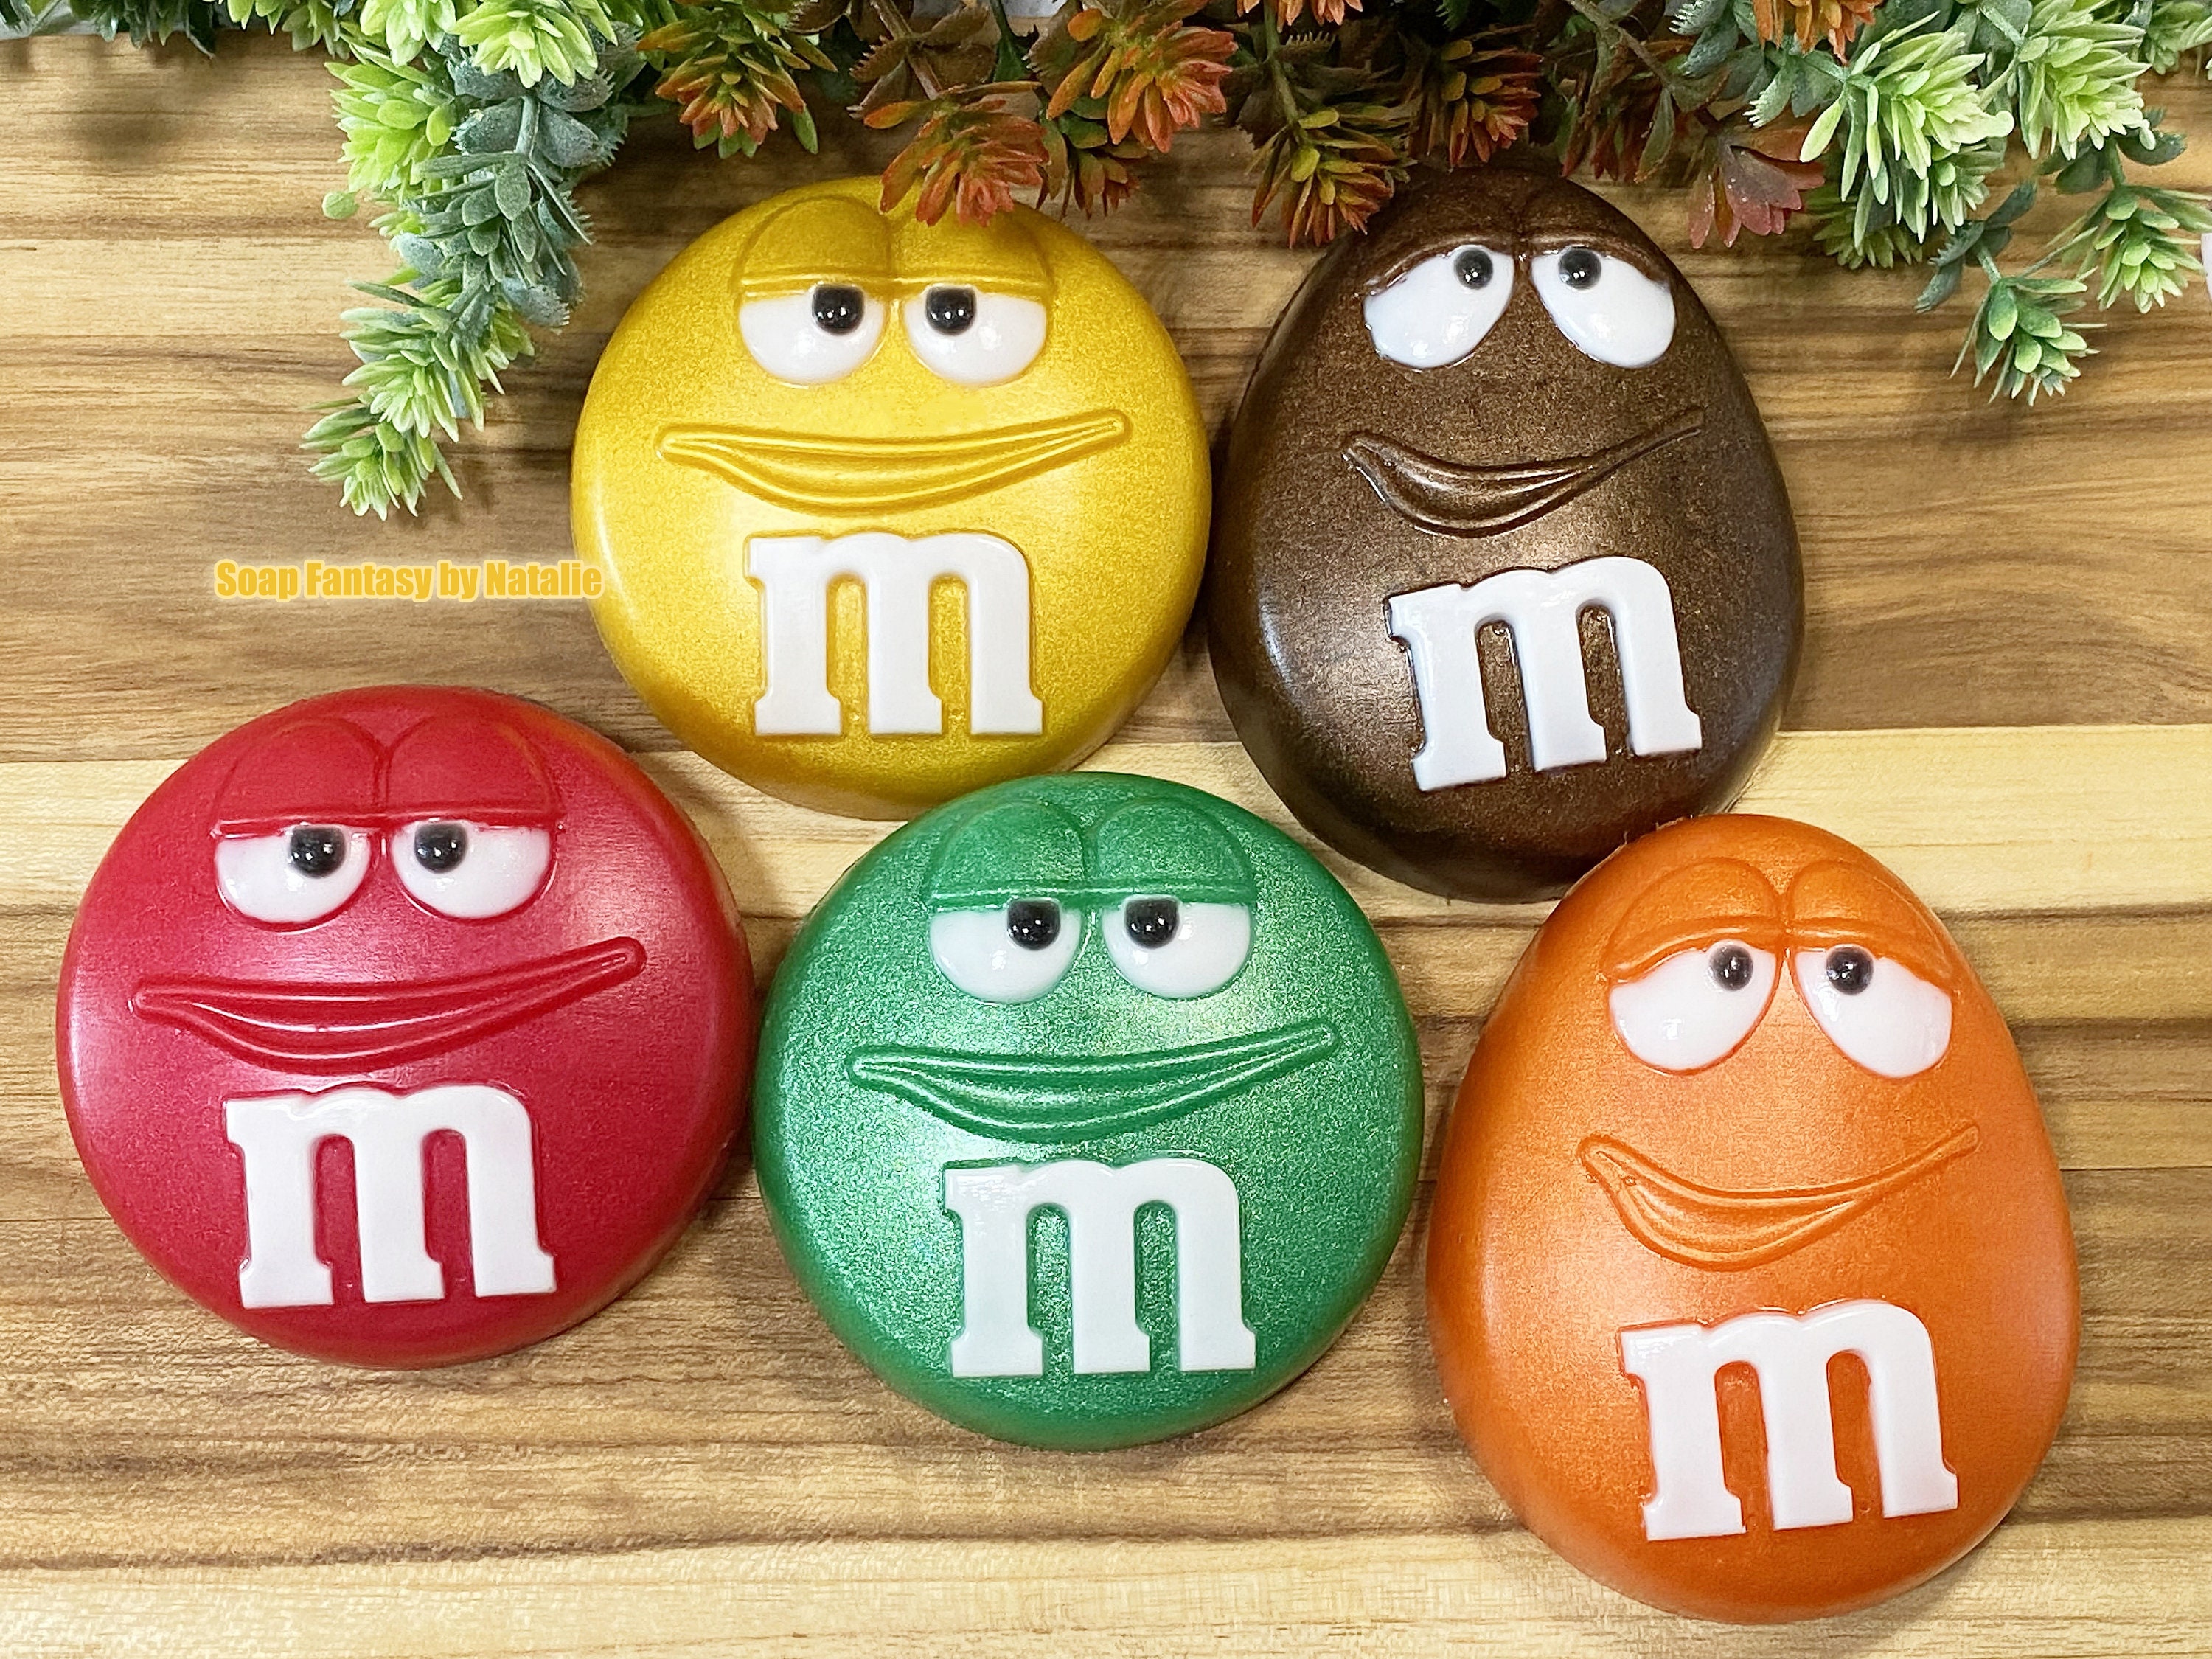 M&M's World Collectible Round Green Candy Purse Zip Closure